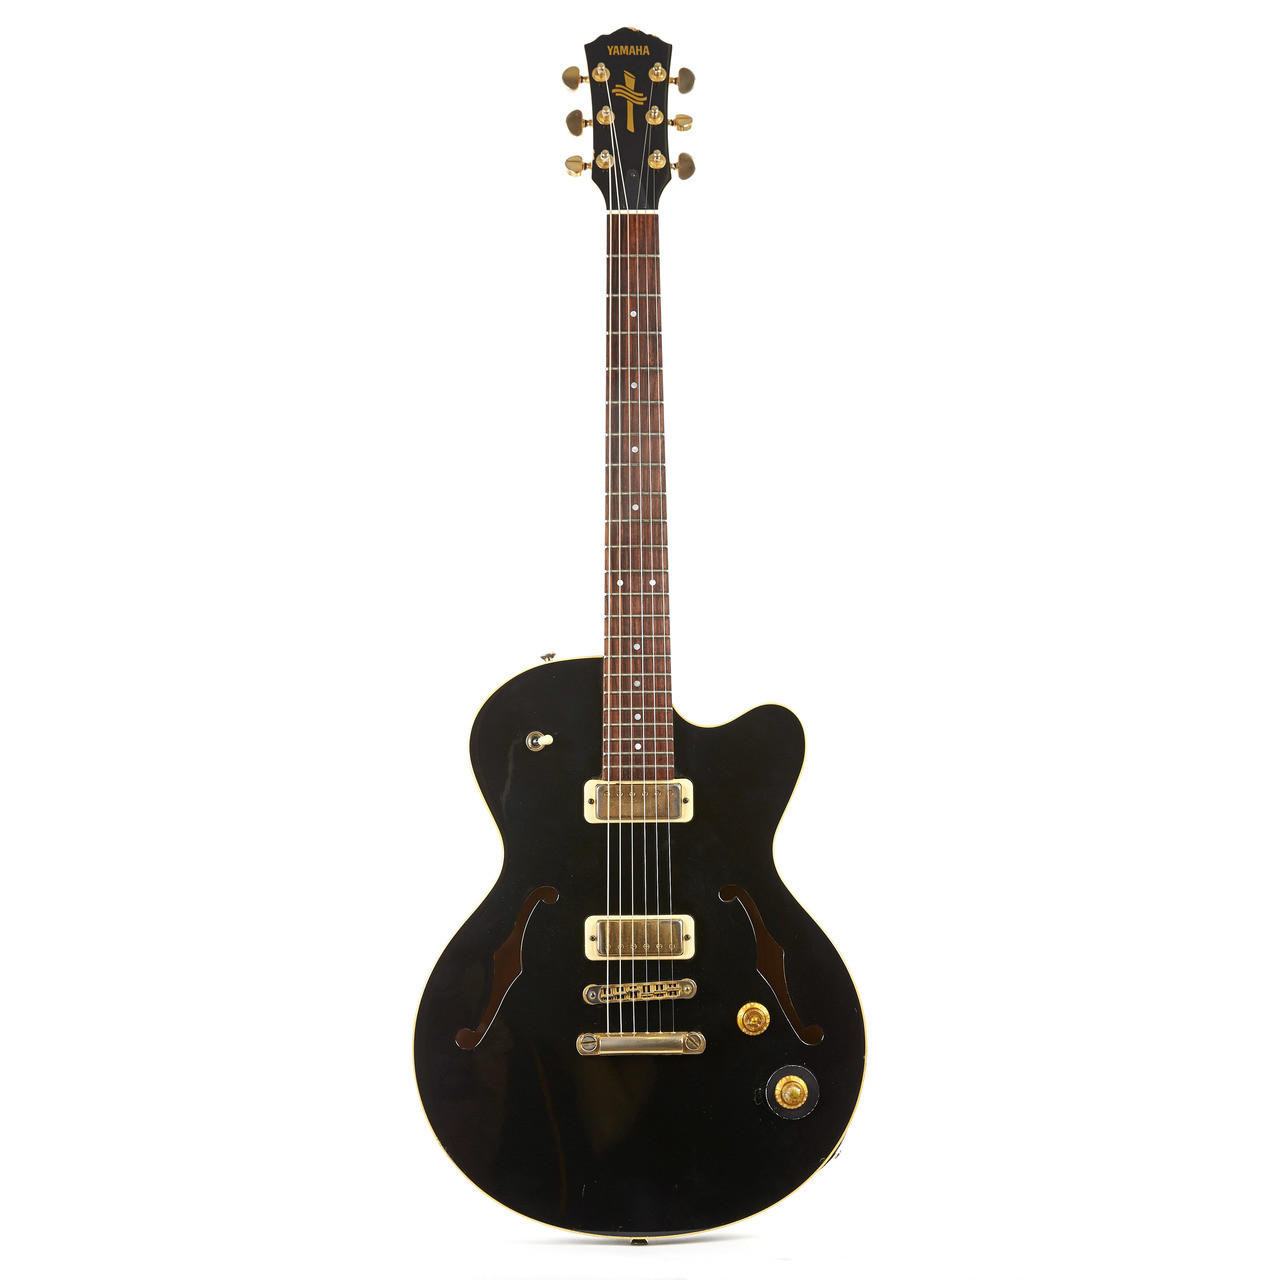 Used Yamaha AEX 520 Semi Hollow Electric Guitar Black Finish